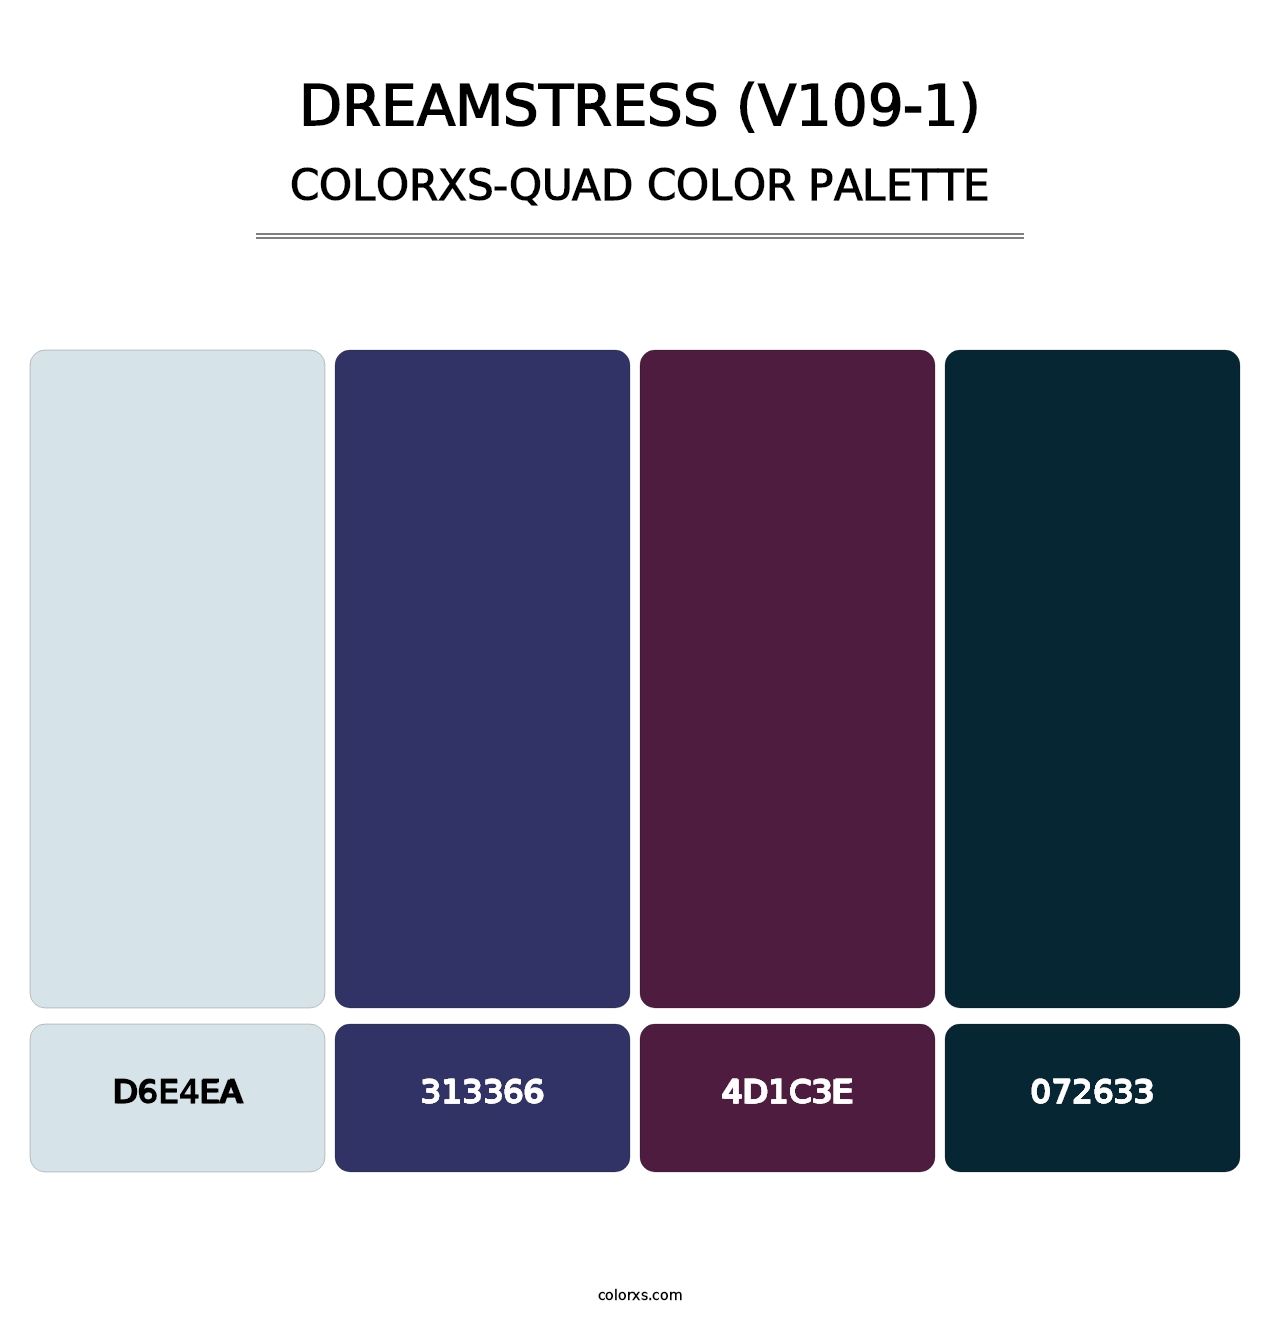 Dreamstress (V109-1) - Colorxs Quad Palette